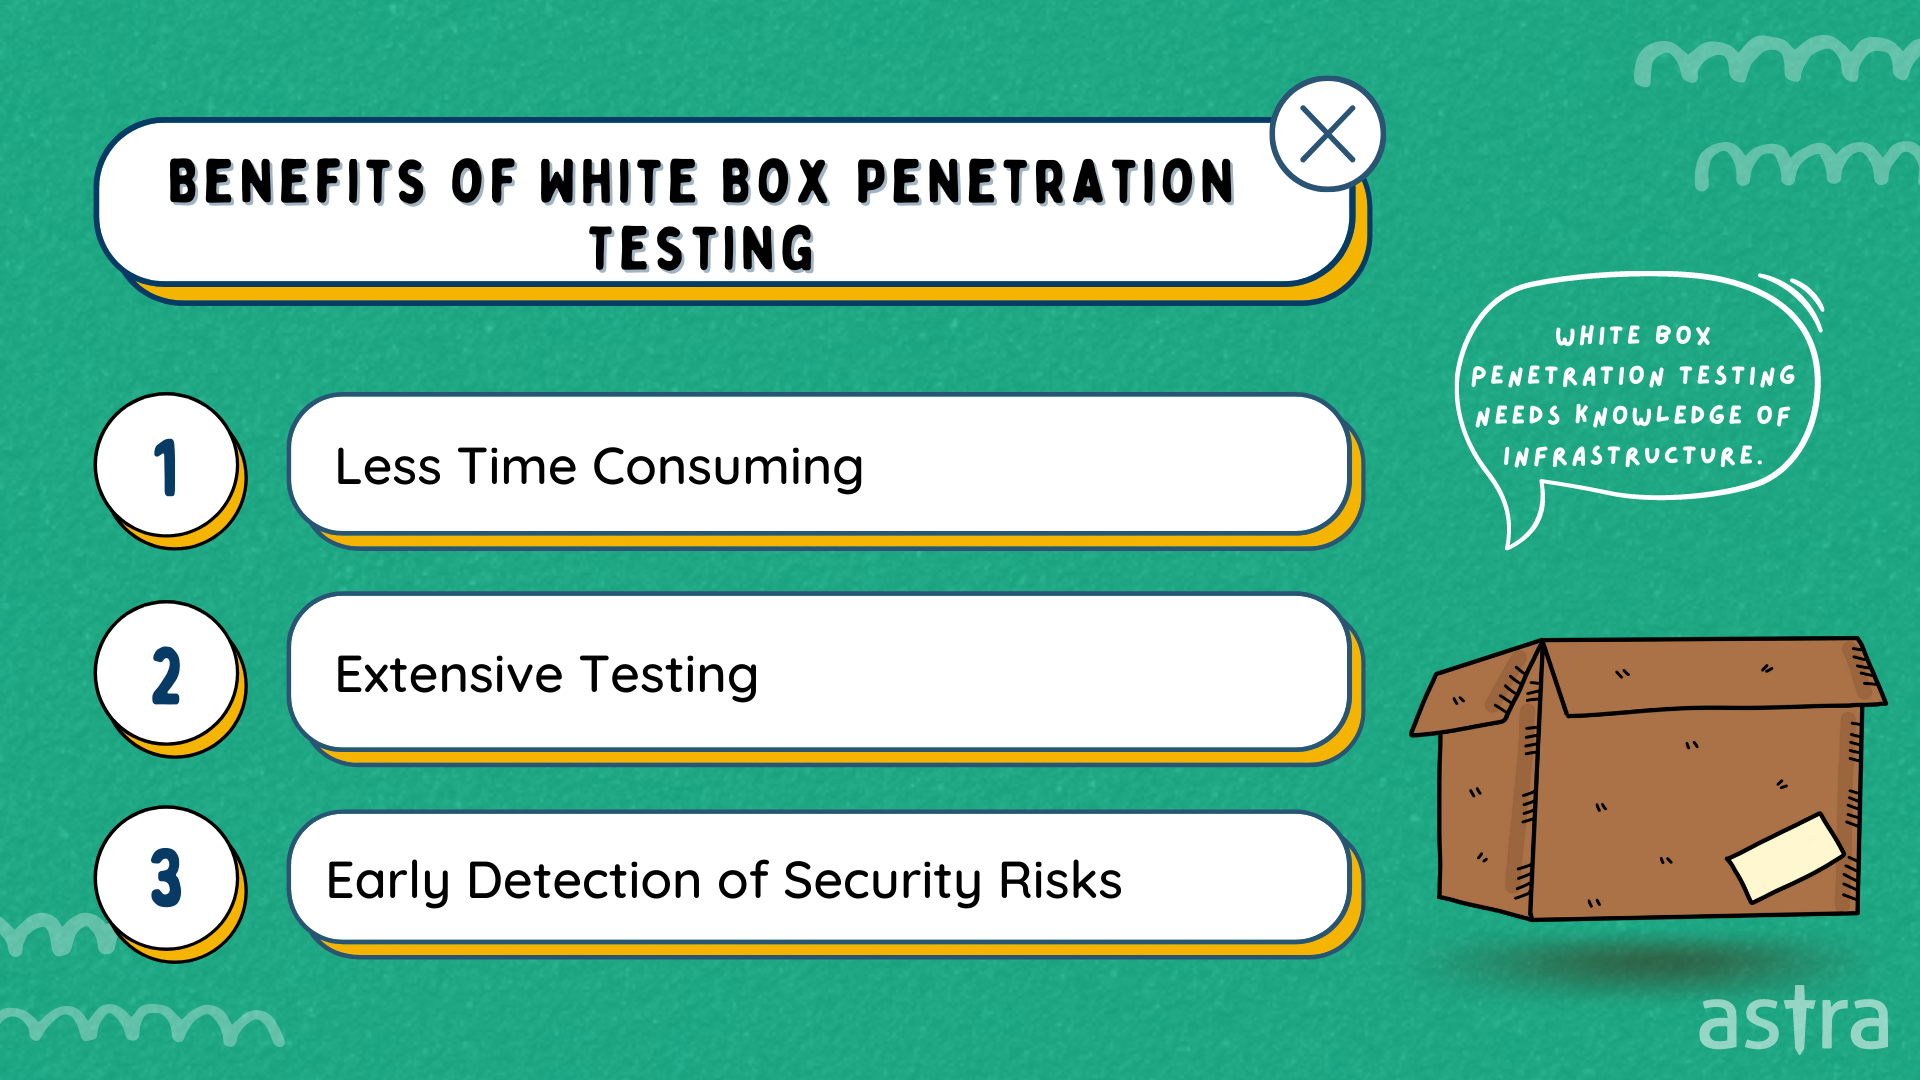 Benefits of White Box Penetration Testing